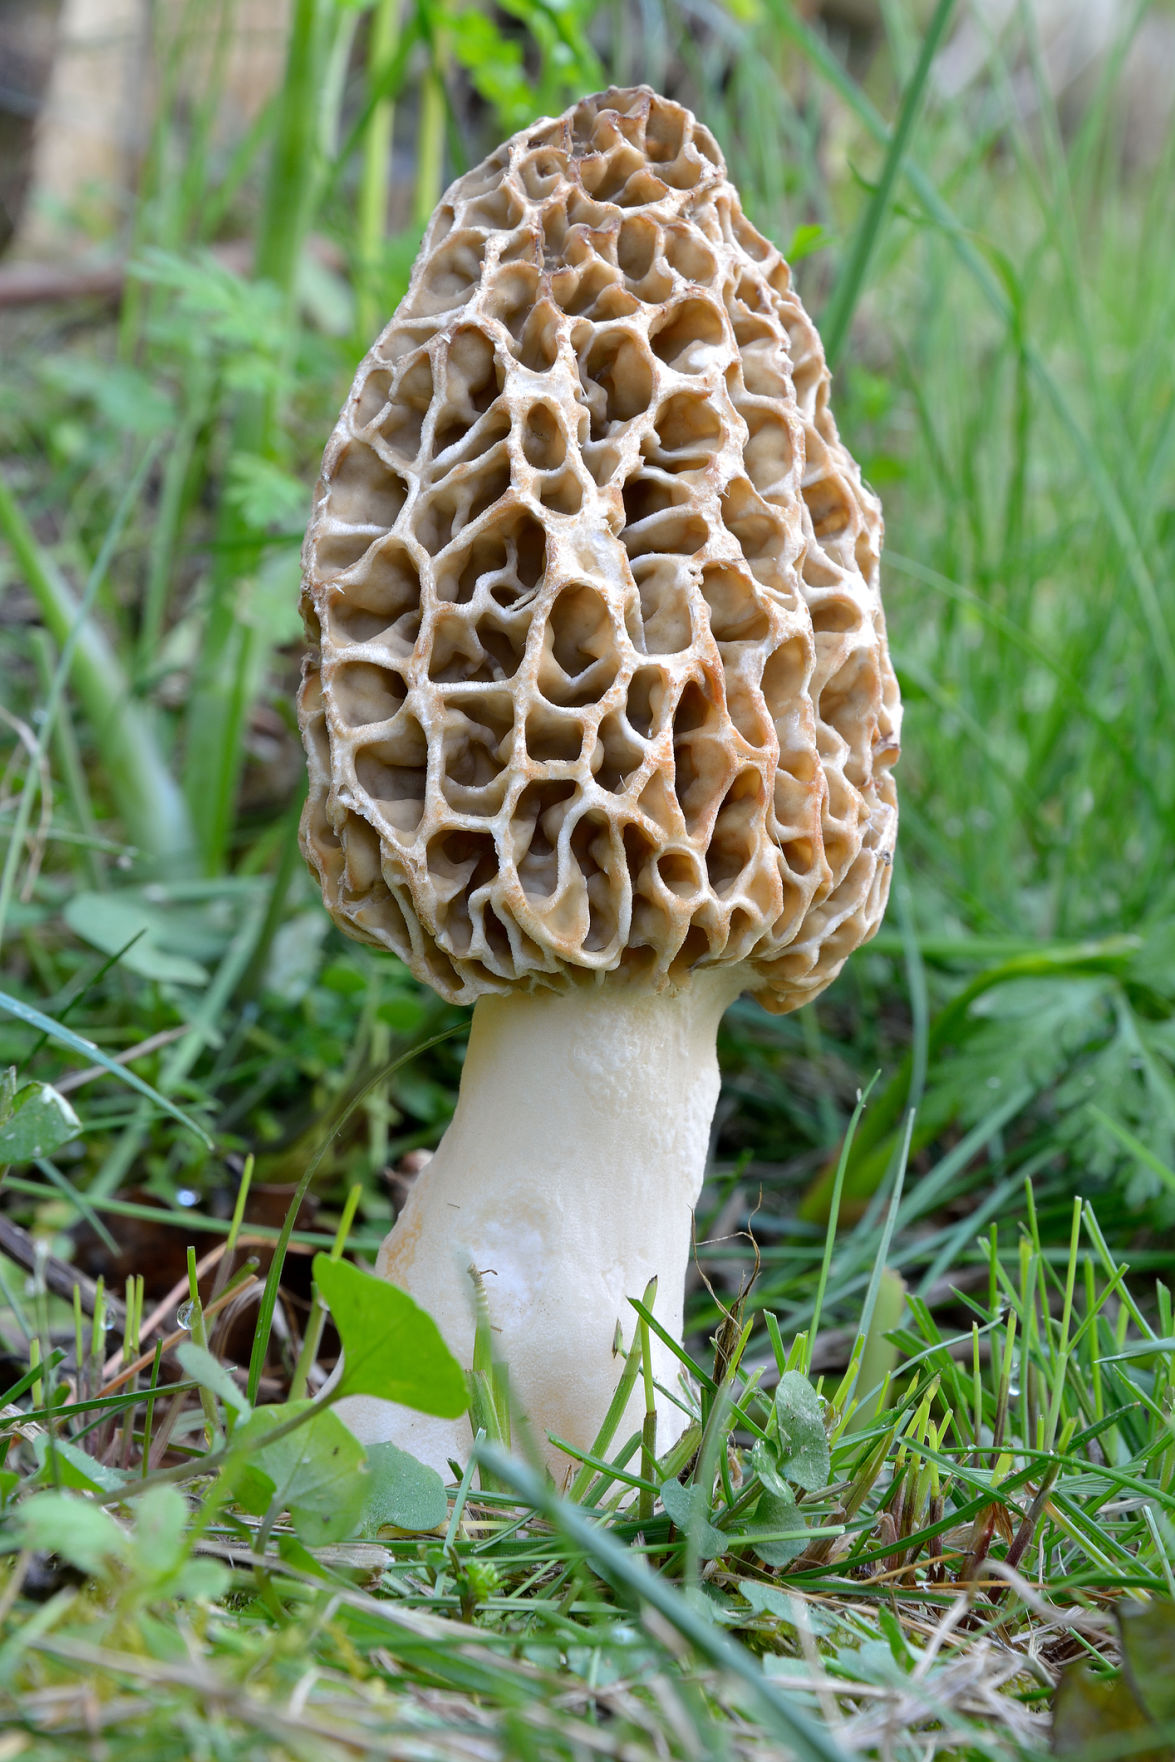 Oklahoma Wild Morel Mushroom Season is Here! Shiitake Mama Says ...